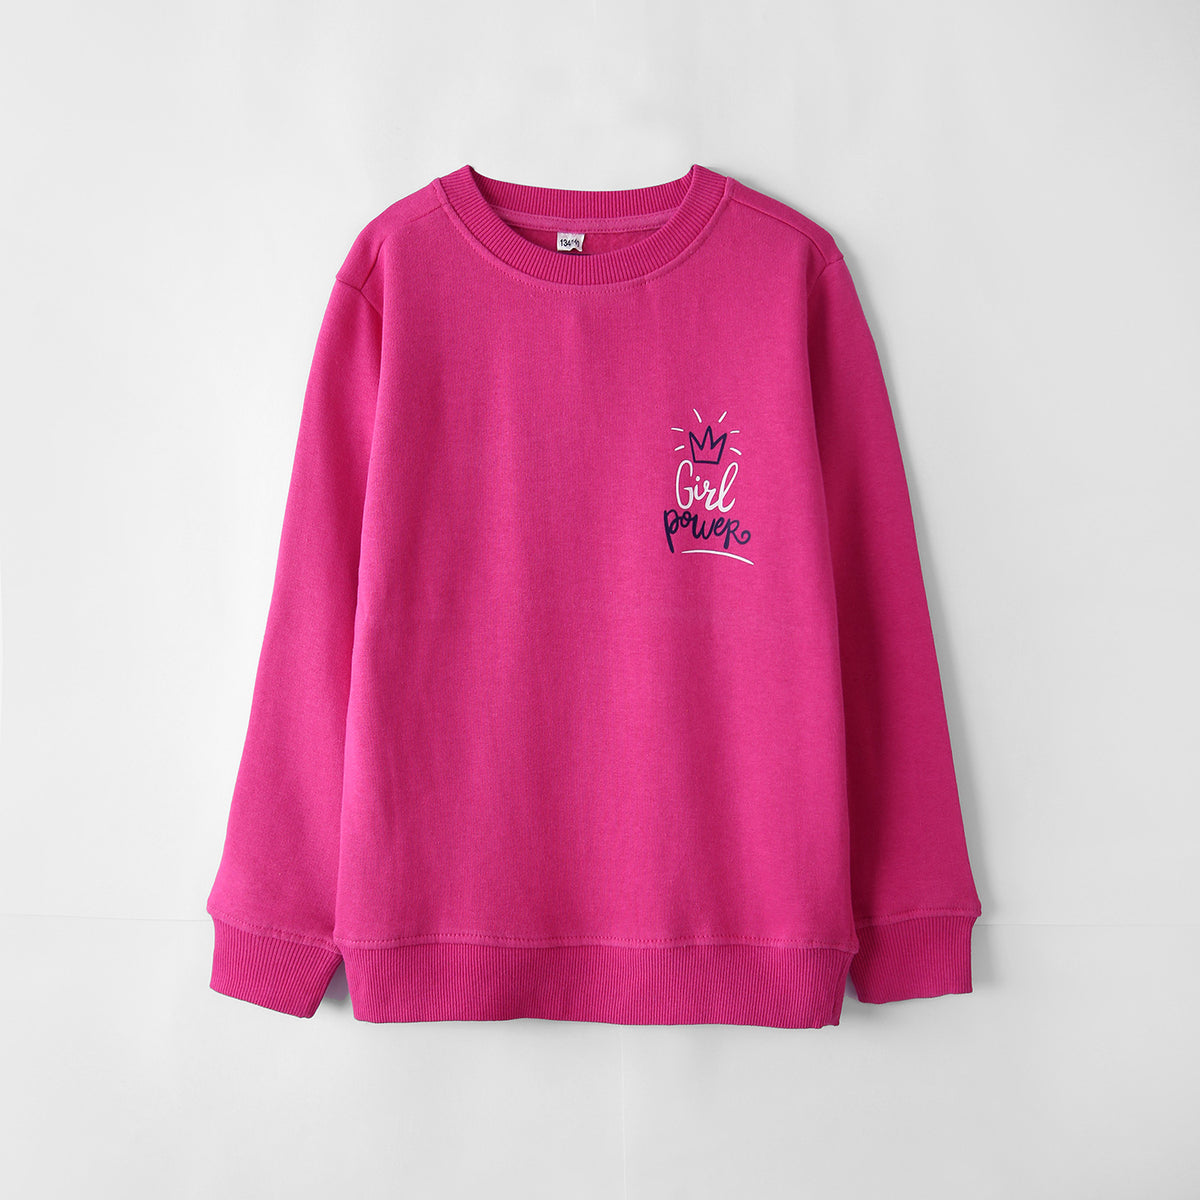 Premium Quality Printed Fleece Pink Sweatshirt For Girls